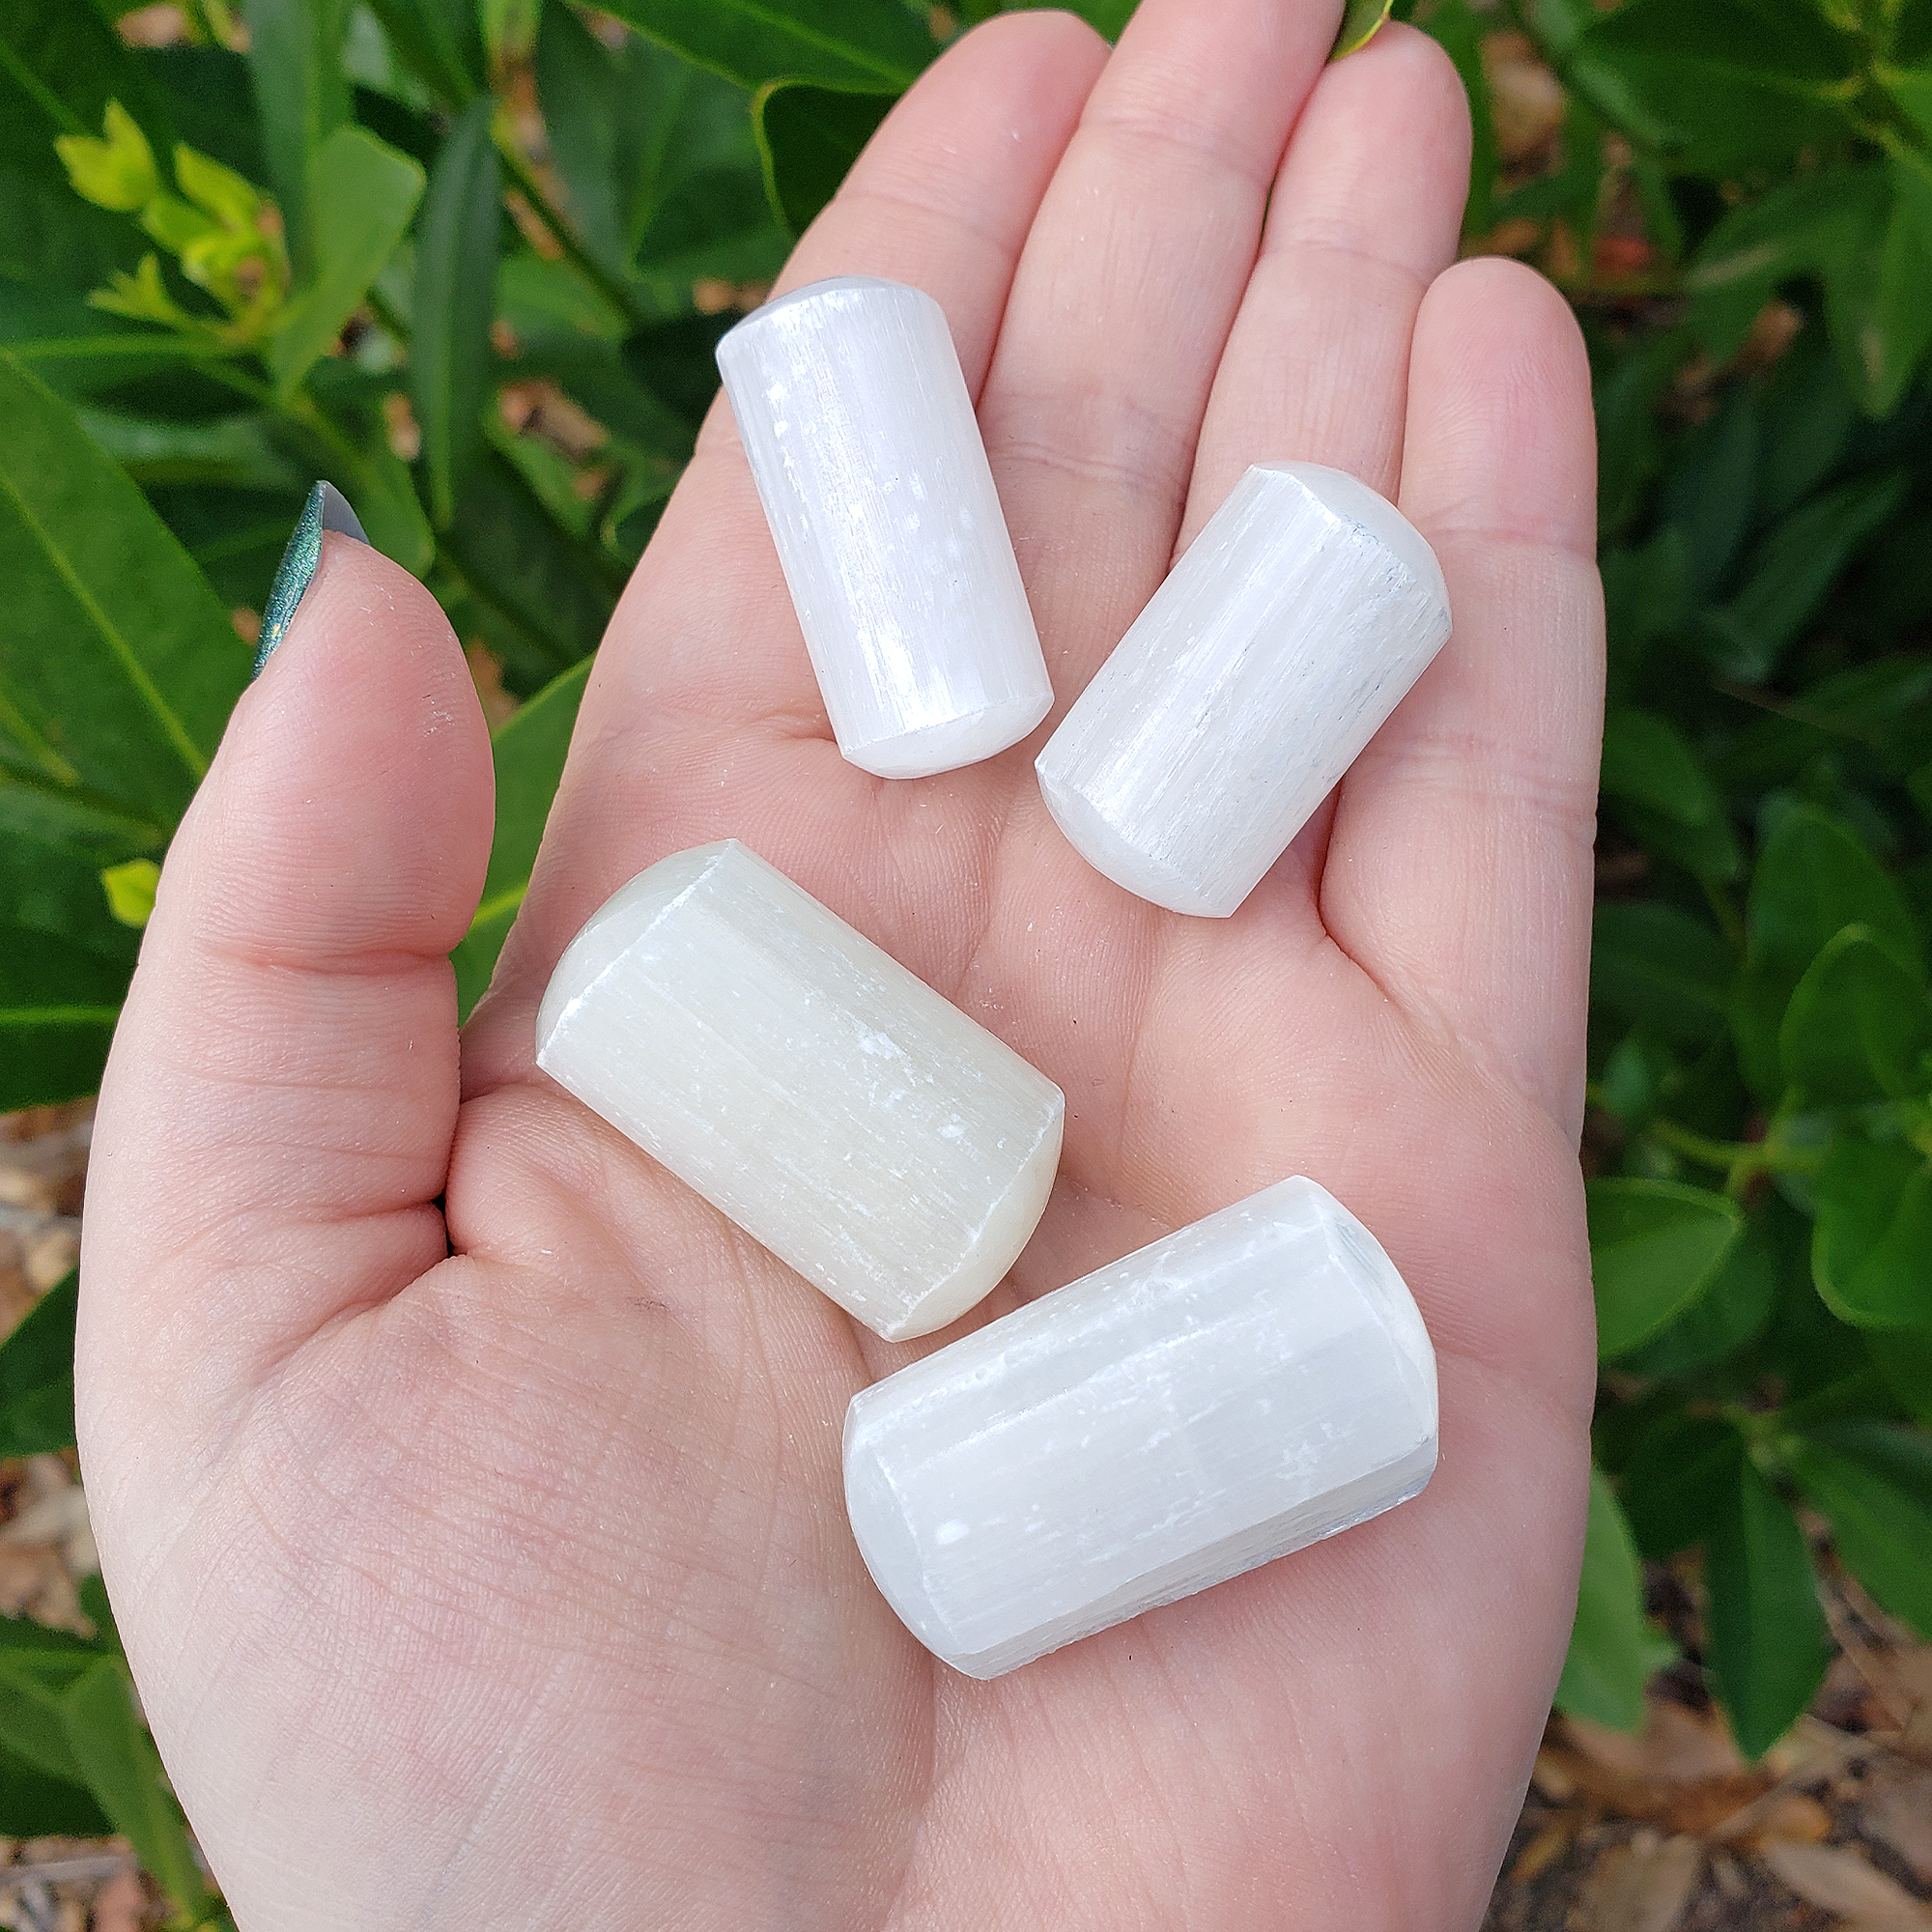 Selenite Crystal Semi-Tumbled Gemstone - One Stone - In Hand in Sunlight